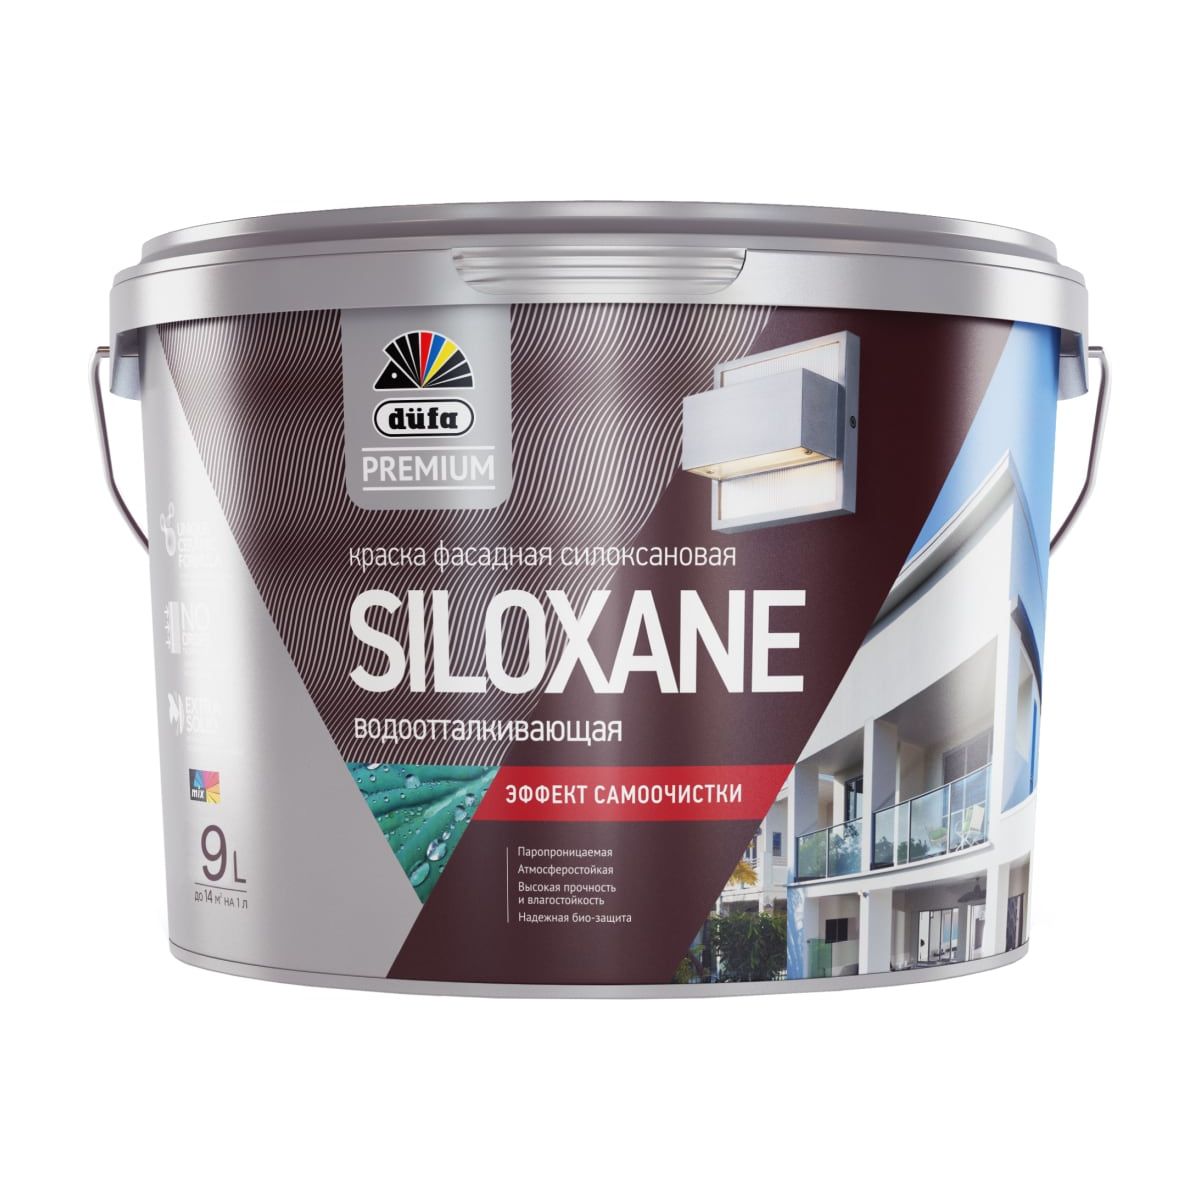 фото Краска dufa premium siloxane водно-дисперсионная, фасадная, силоксановая, база 1, 9 л